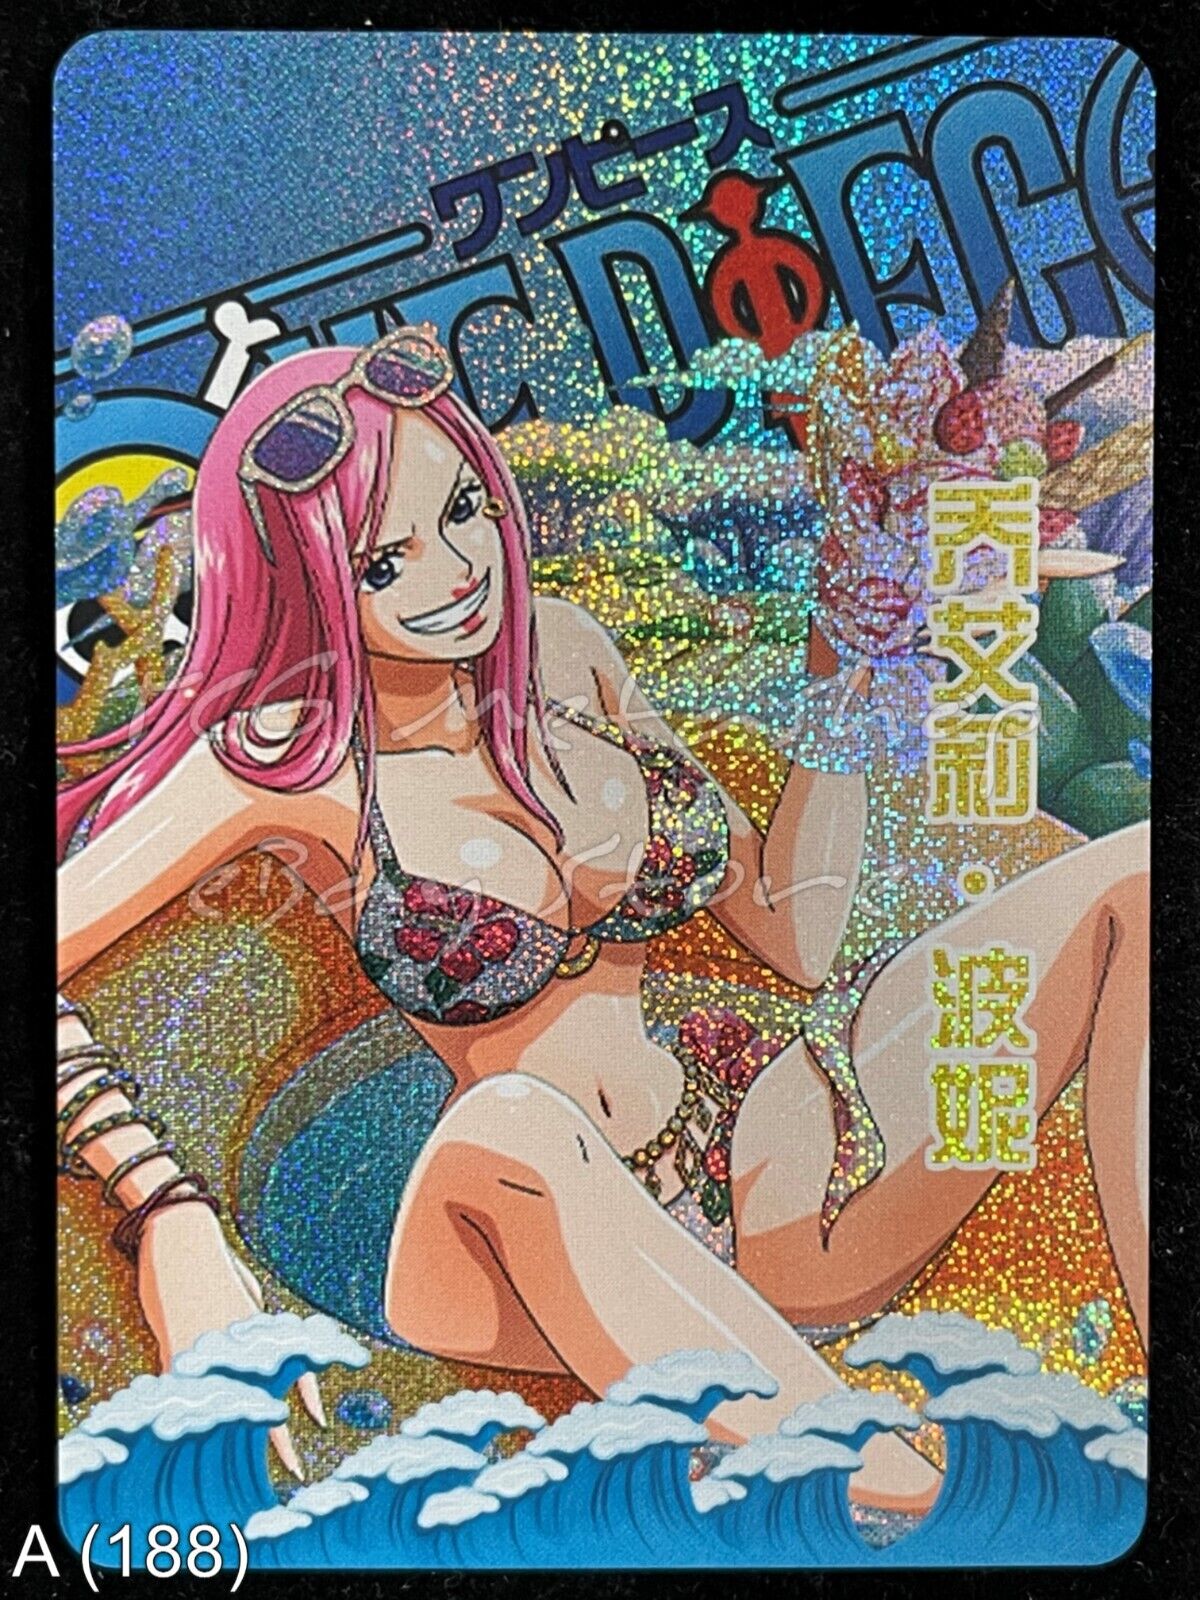 🔥 A 188 Jewelry Bonney One Piece Goddess Story Anime Waifu Card ACG 🔥